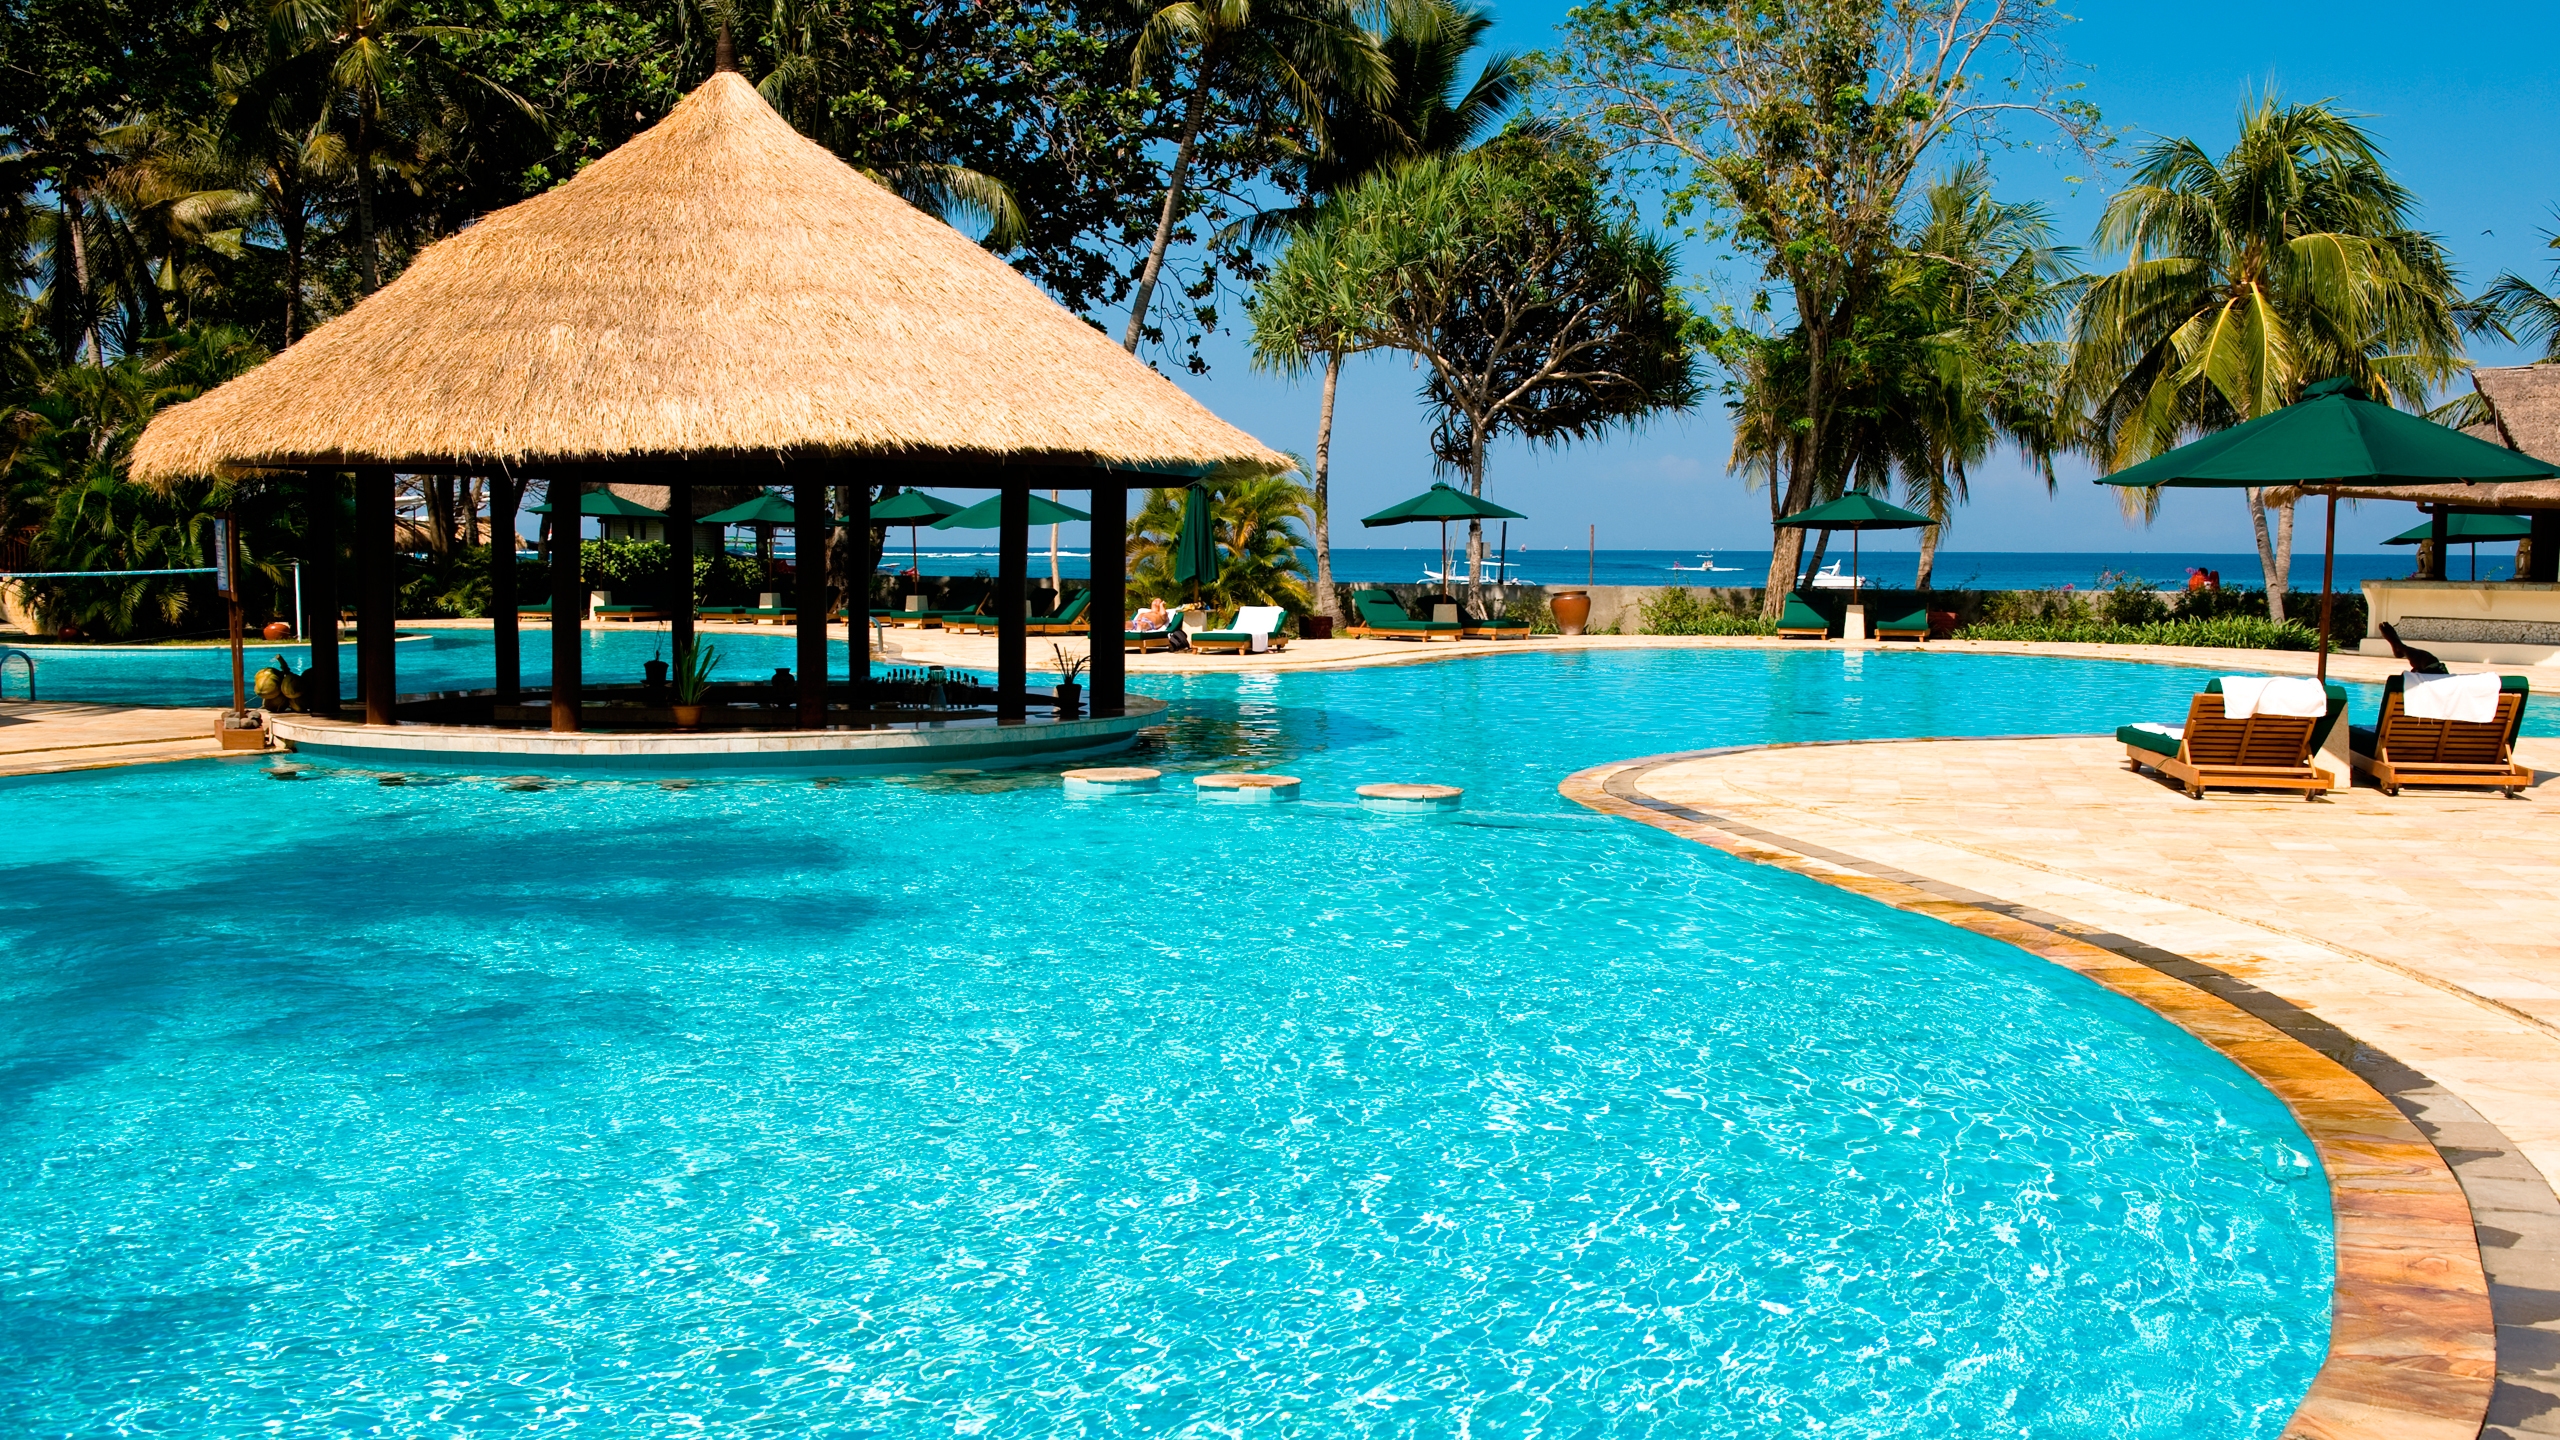 Luxury Resorts Costa Rica for 2560x1440 HDTV resolution